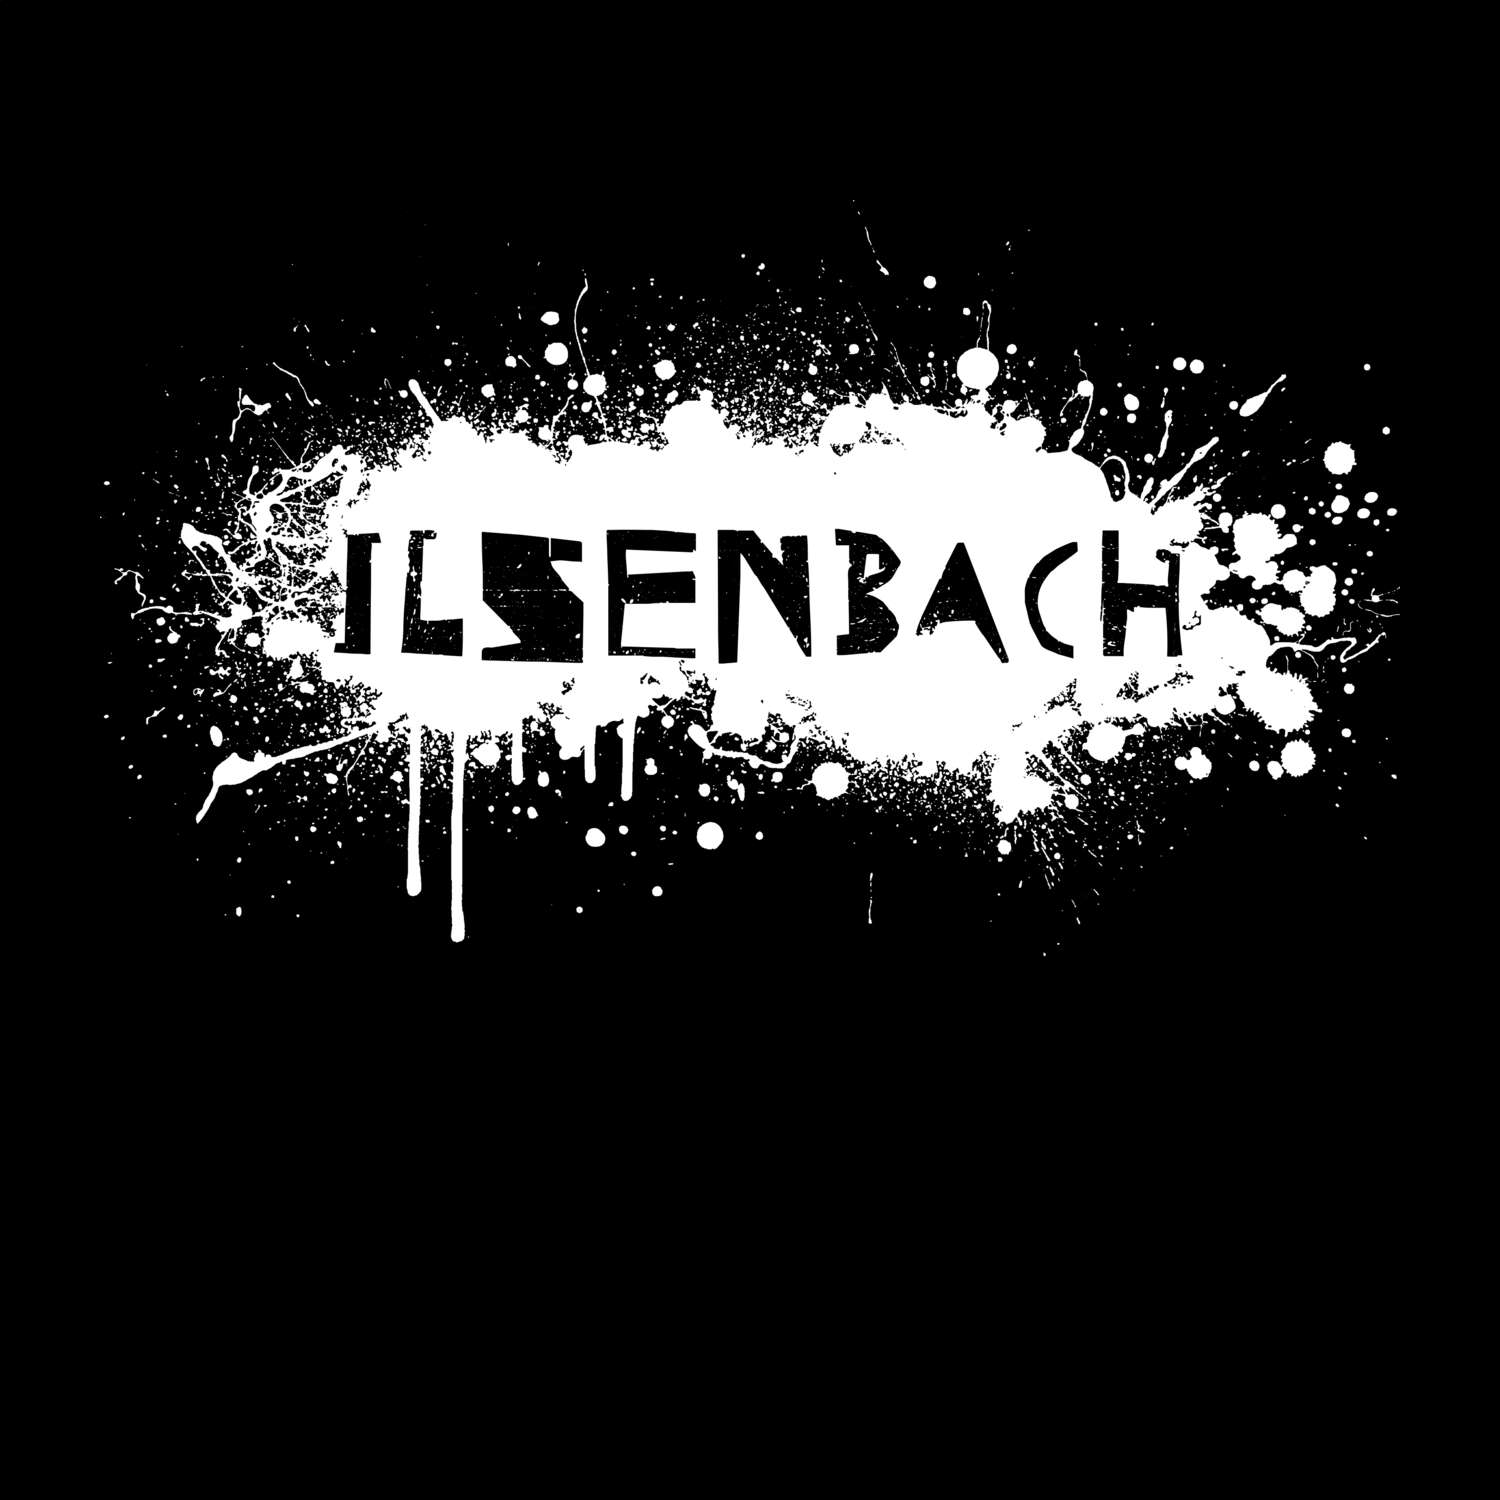 Ilsenbach T-Shirt »Paint Splash Punk«